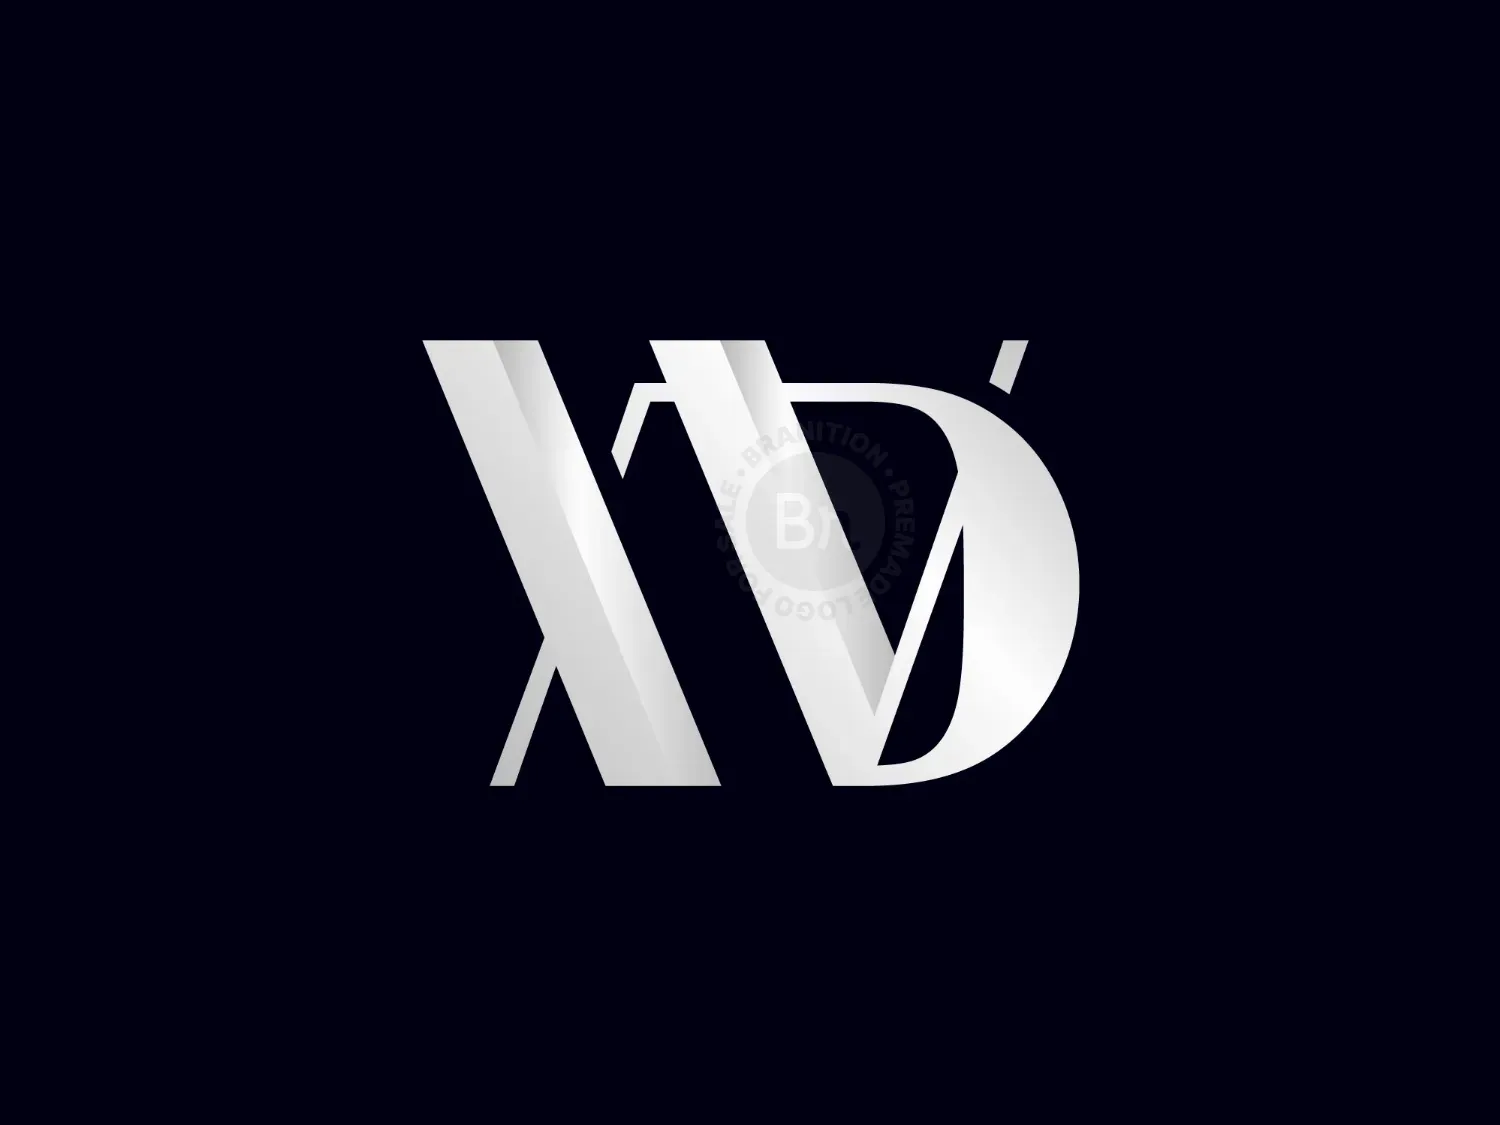 Dw logo Black and White Stock Photos & Images - Alamy